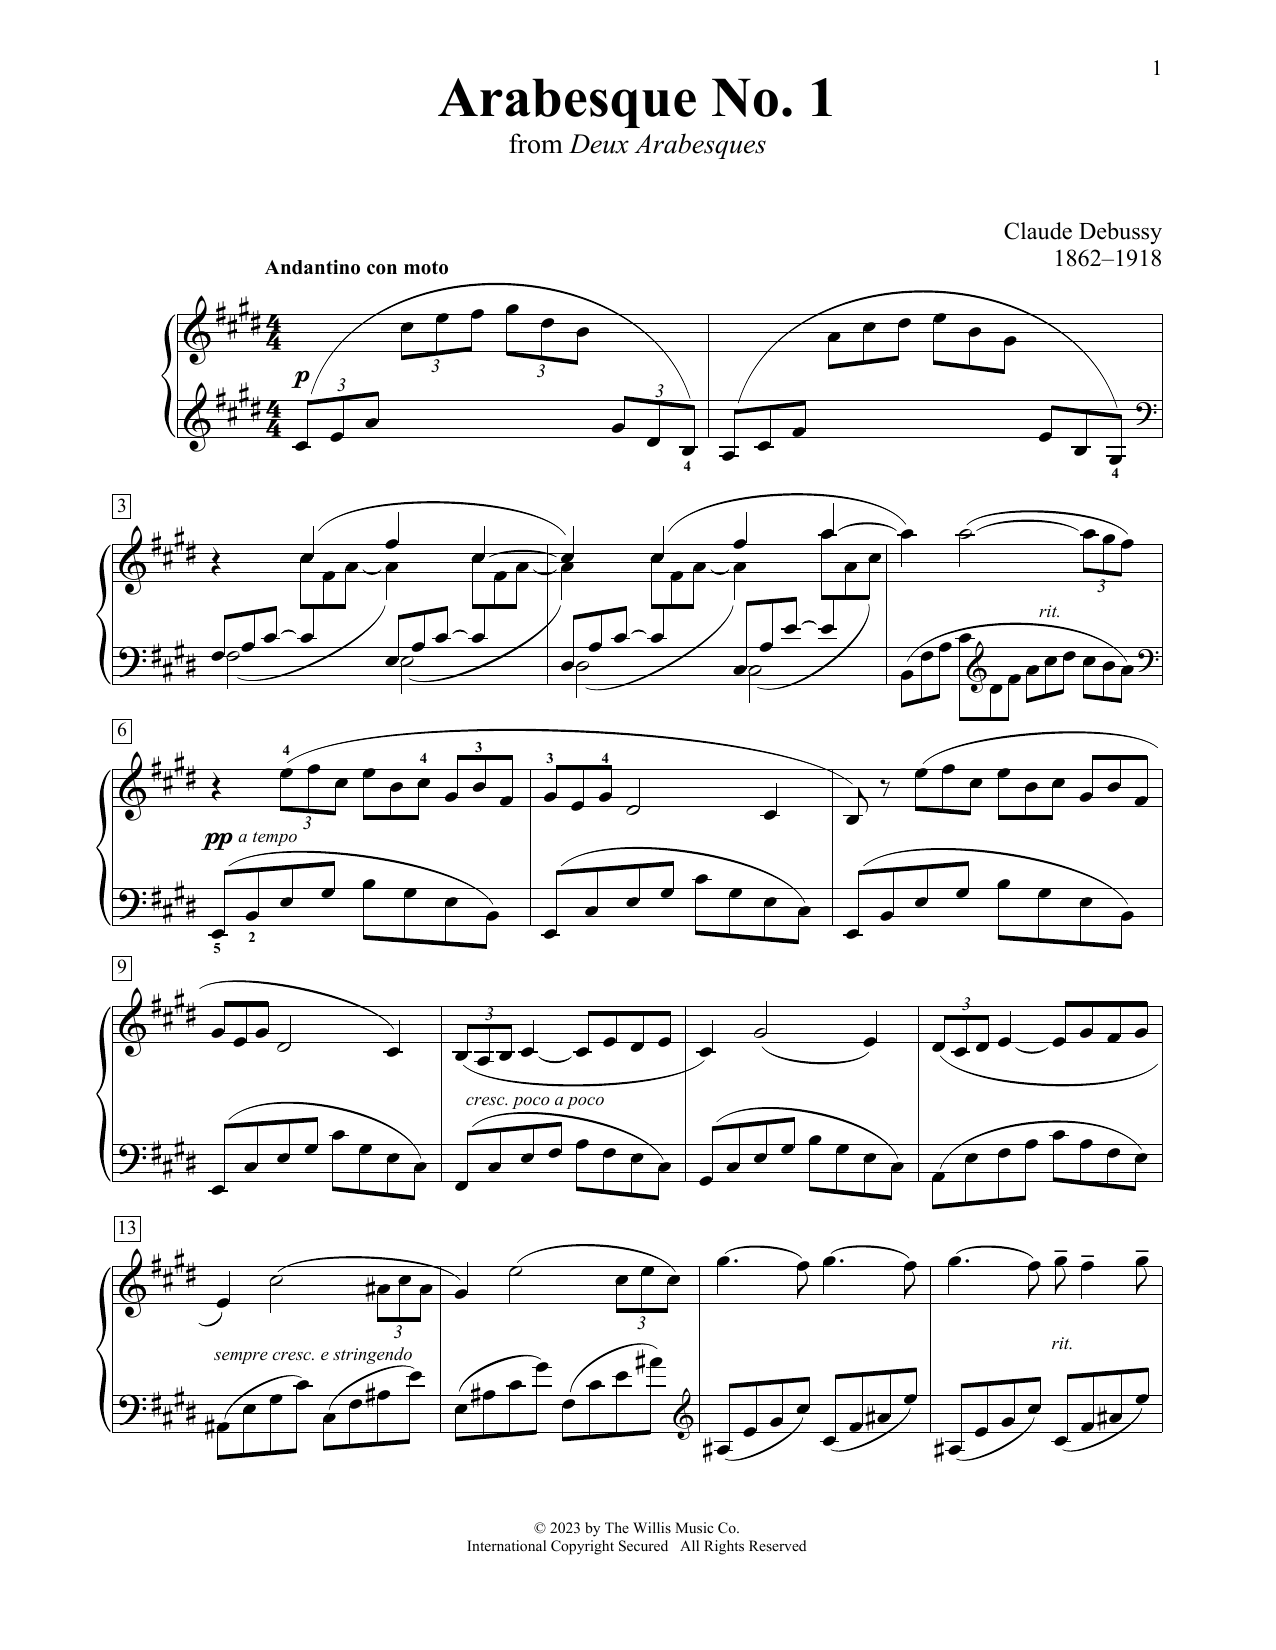 Claude Debussy Arabesque No. 1 sheet music notes printable PDF score